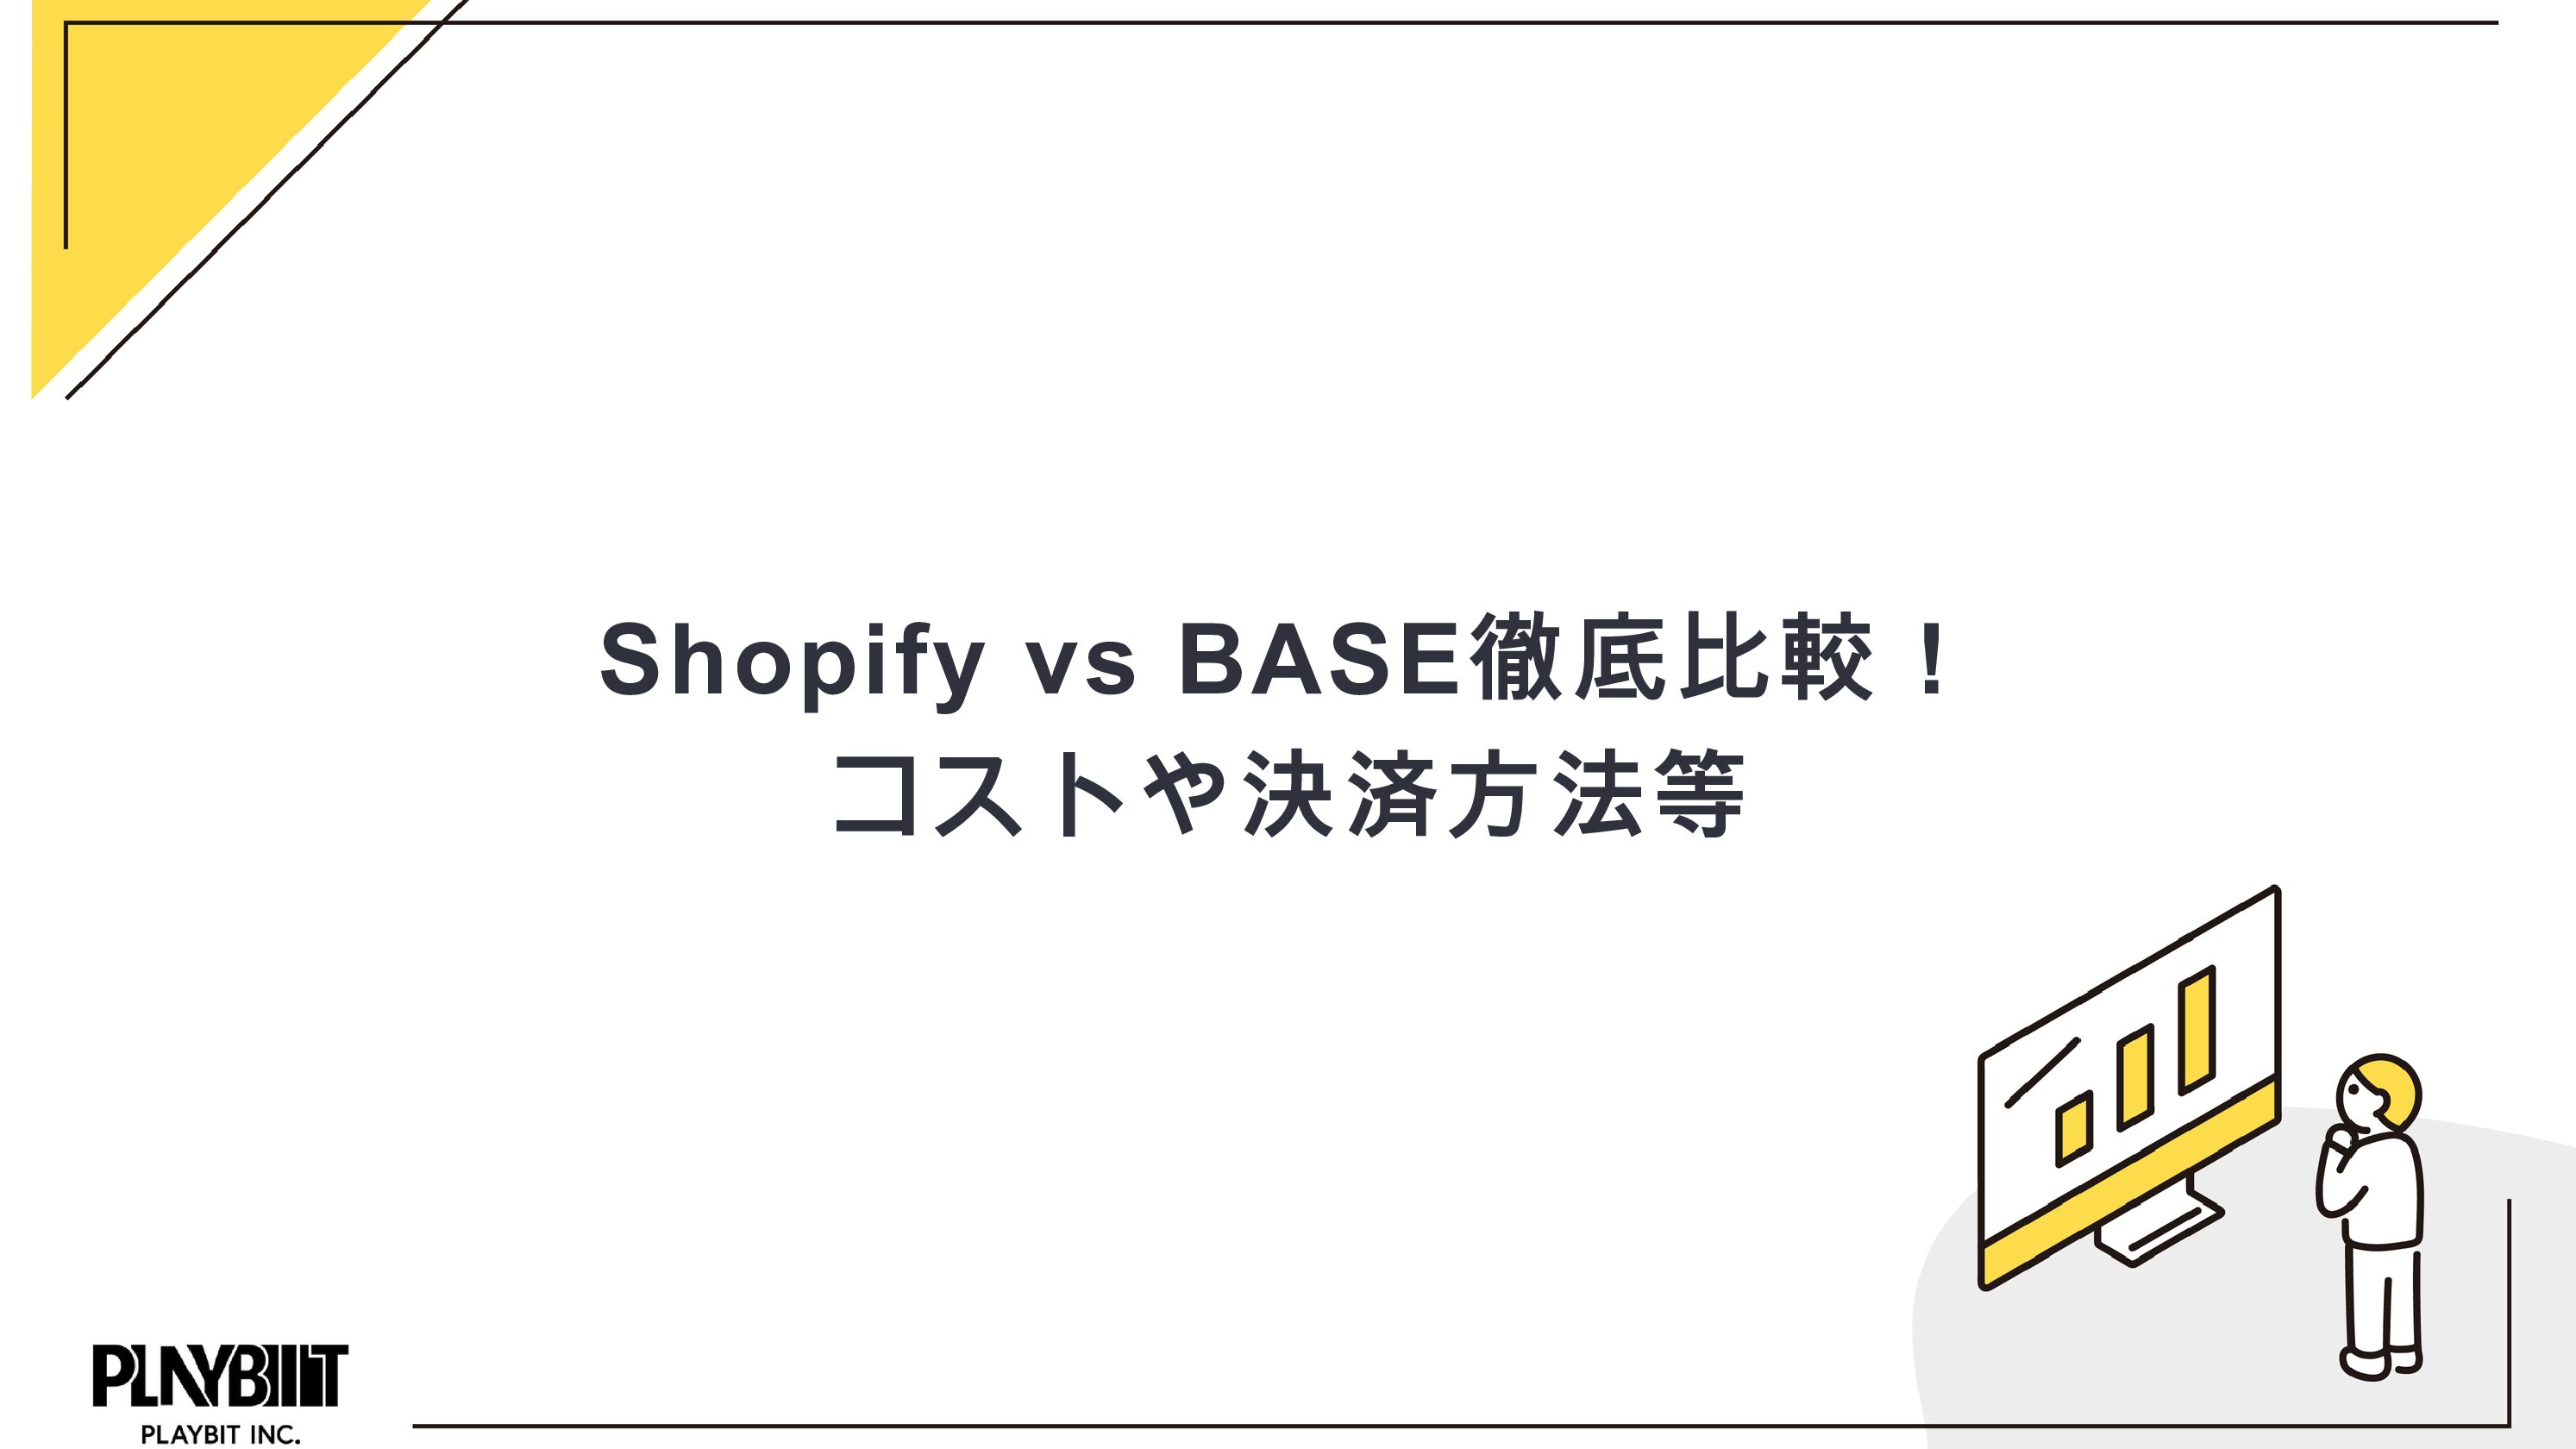 Shopify vs BASE徹底比較！コストや決済方法等